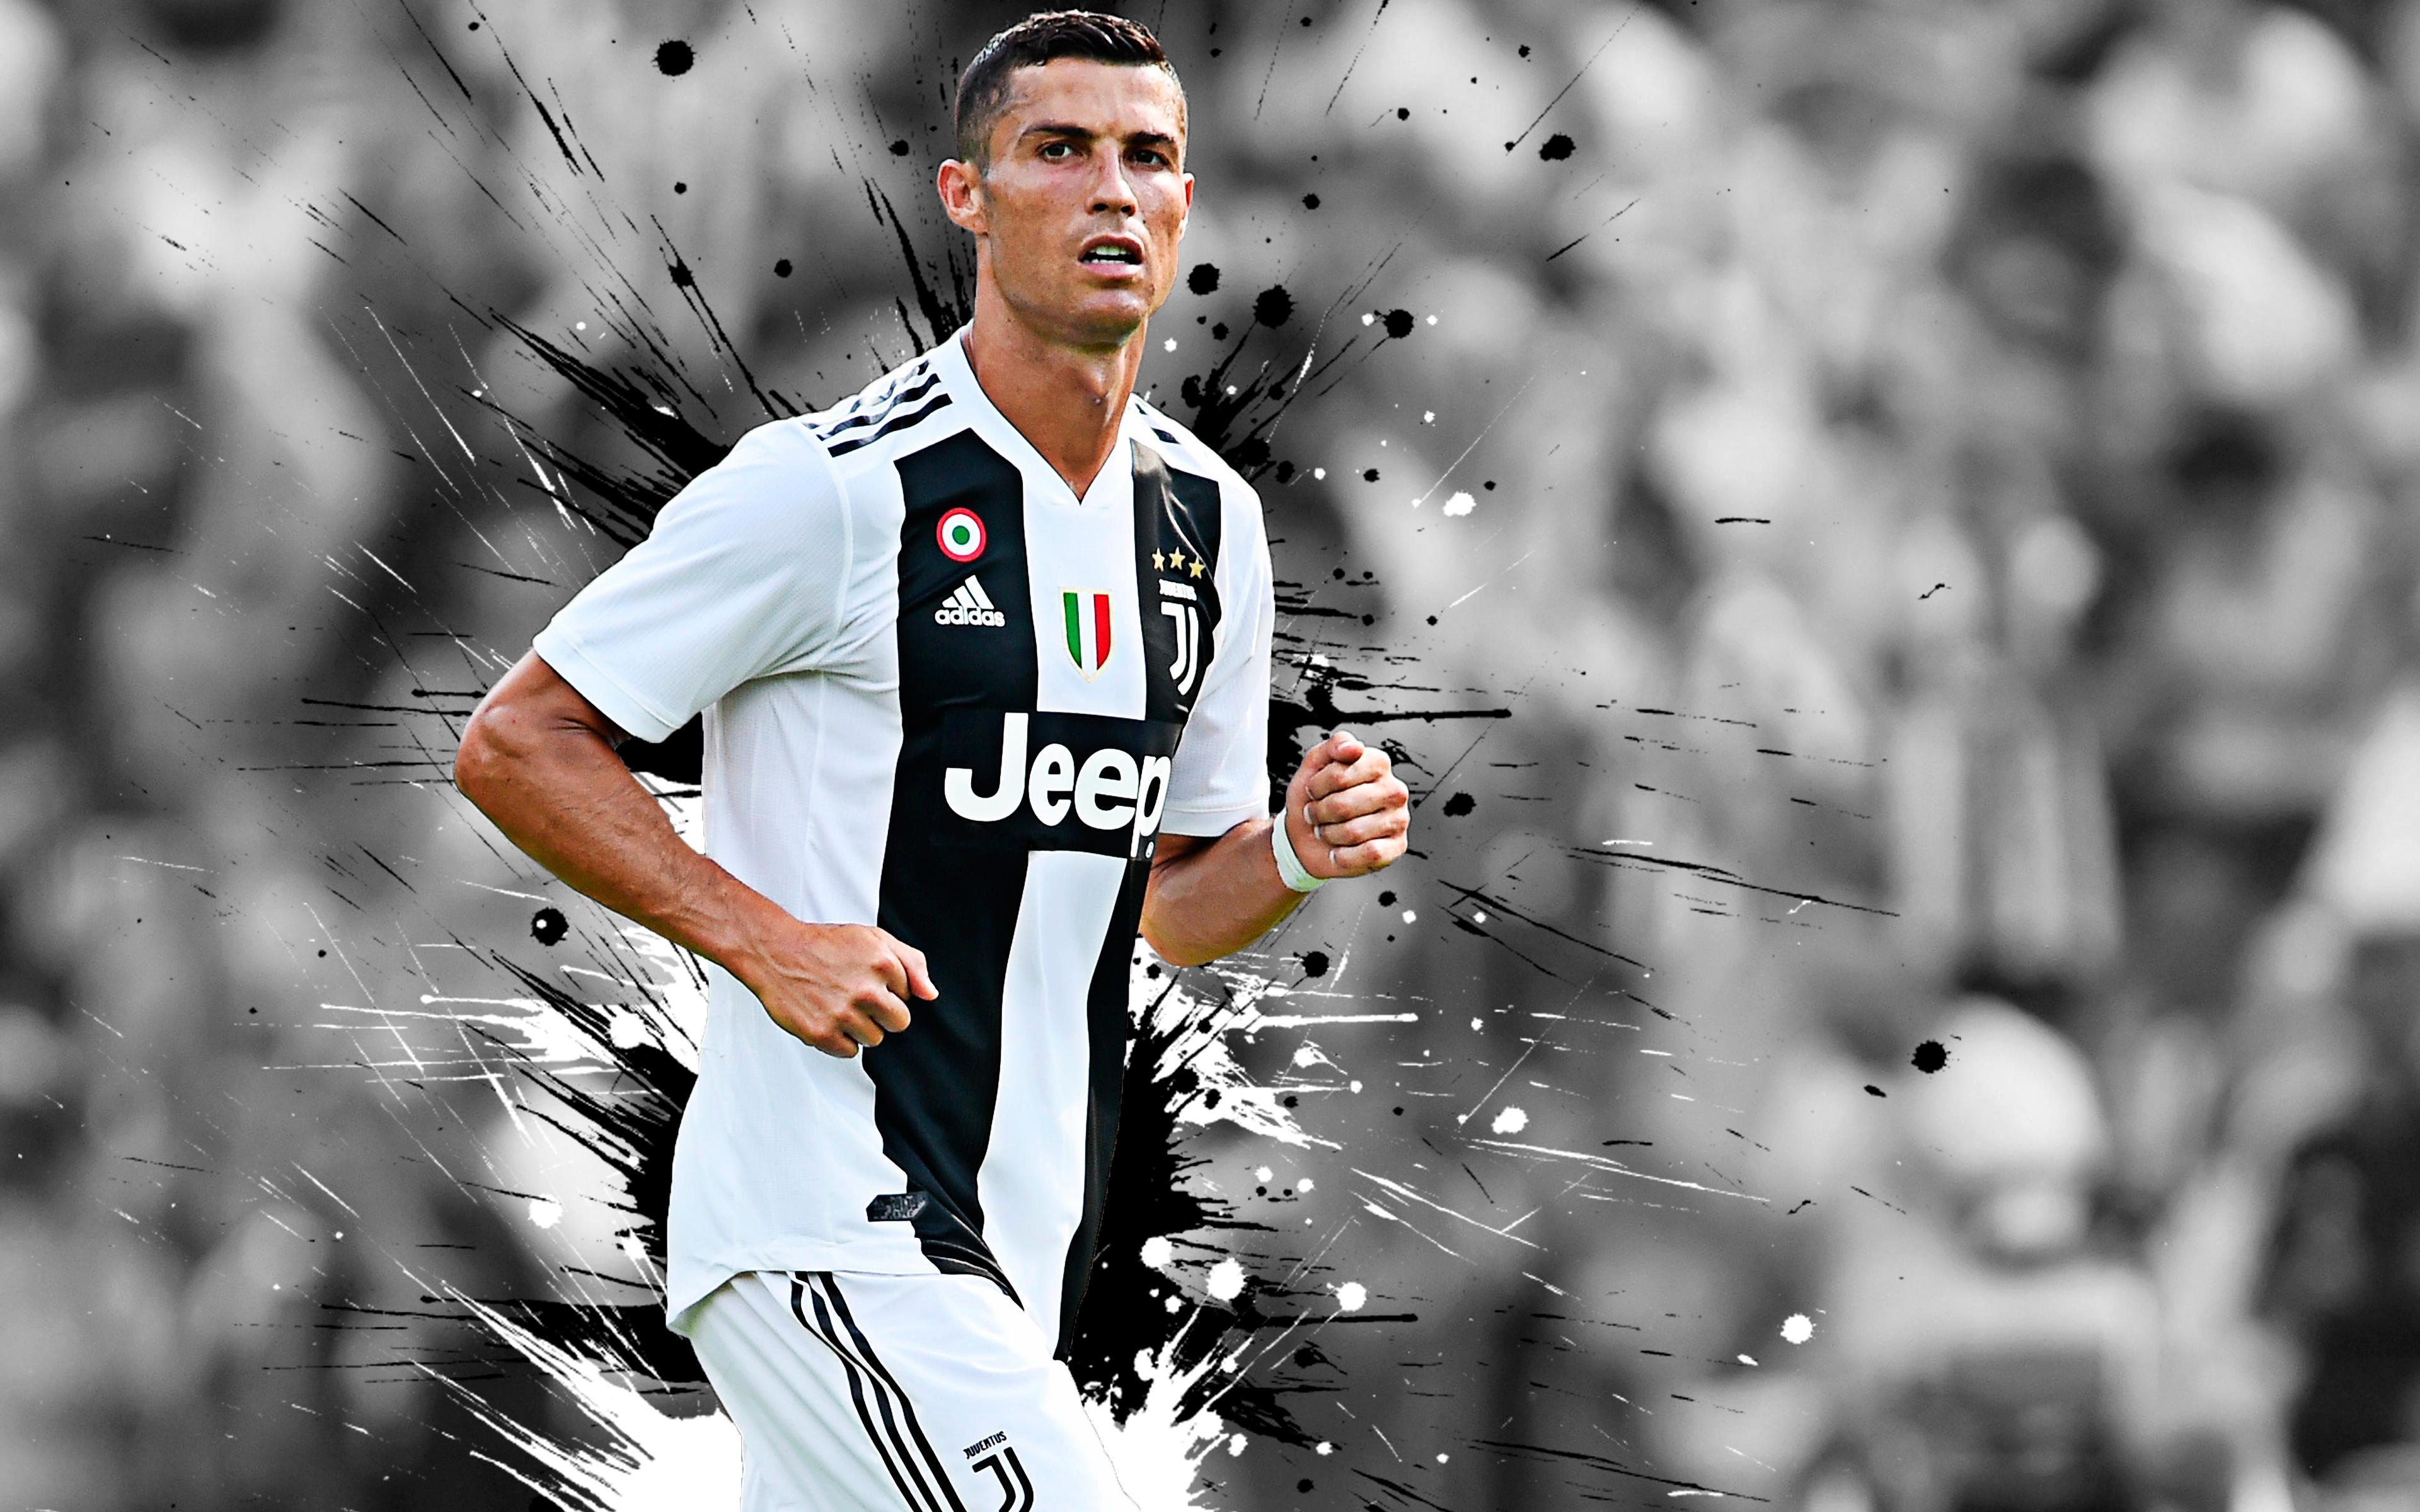 Cristiano Ronaldo 4k Wallpapers - Wallpaper Cave